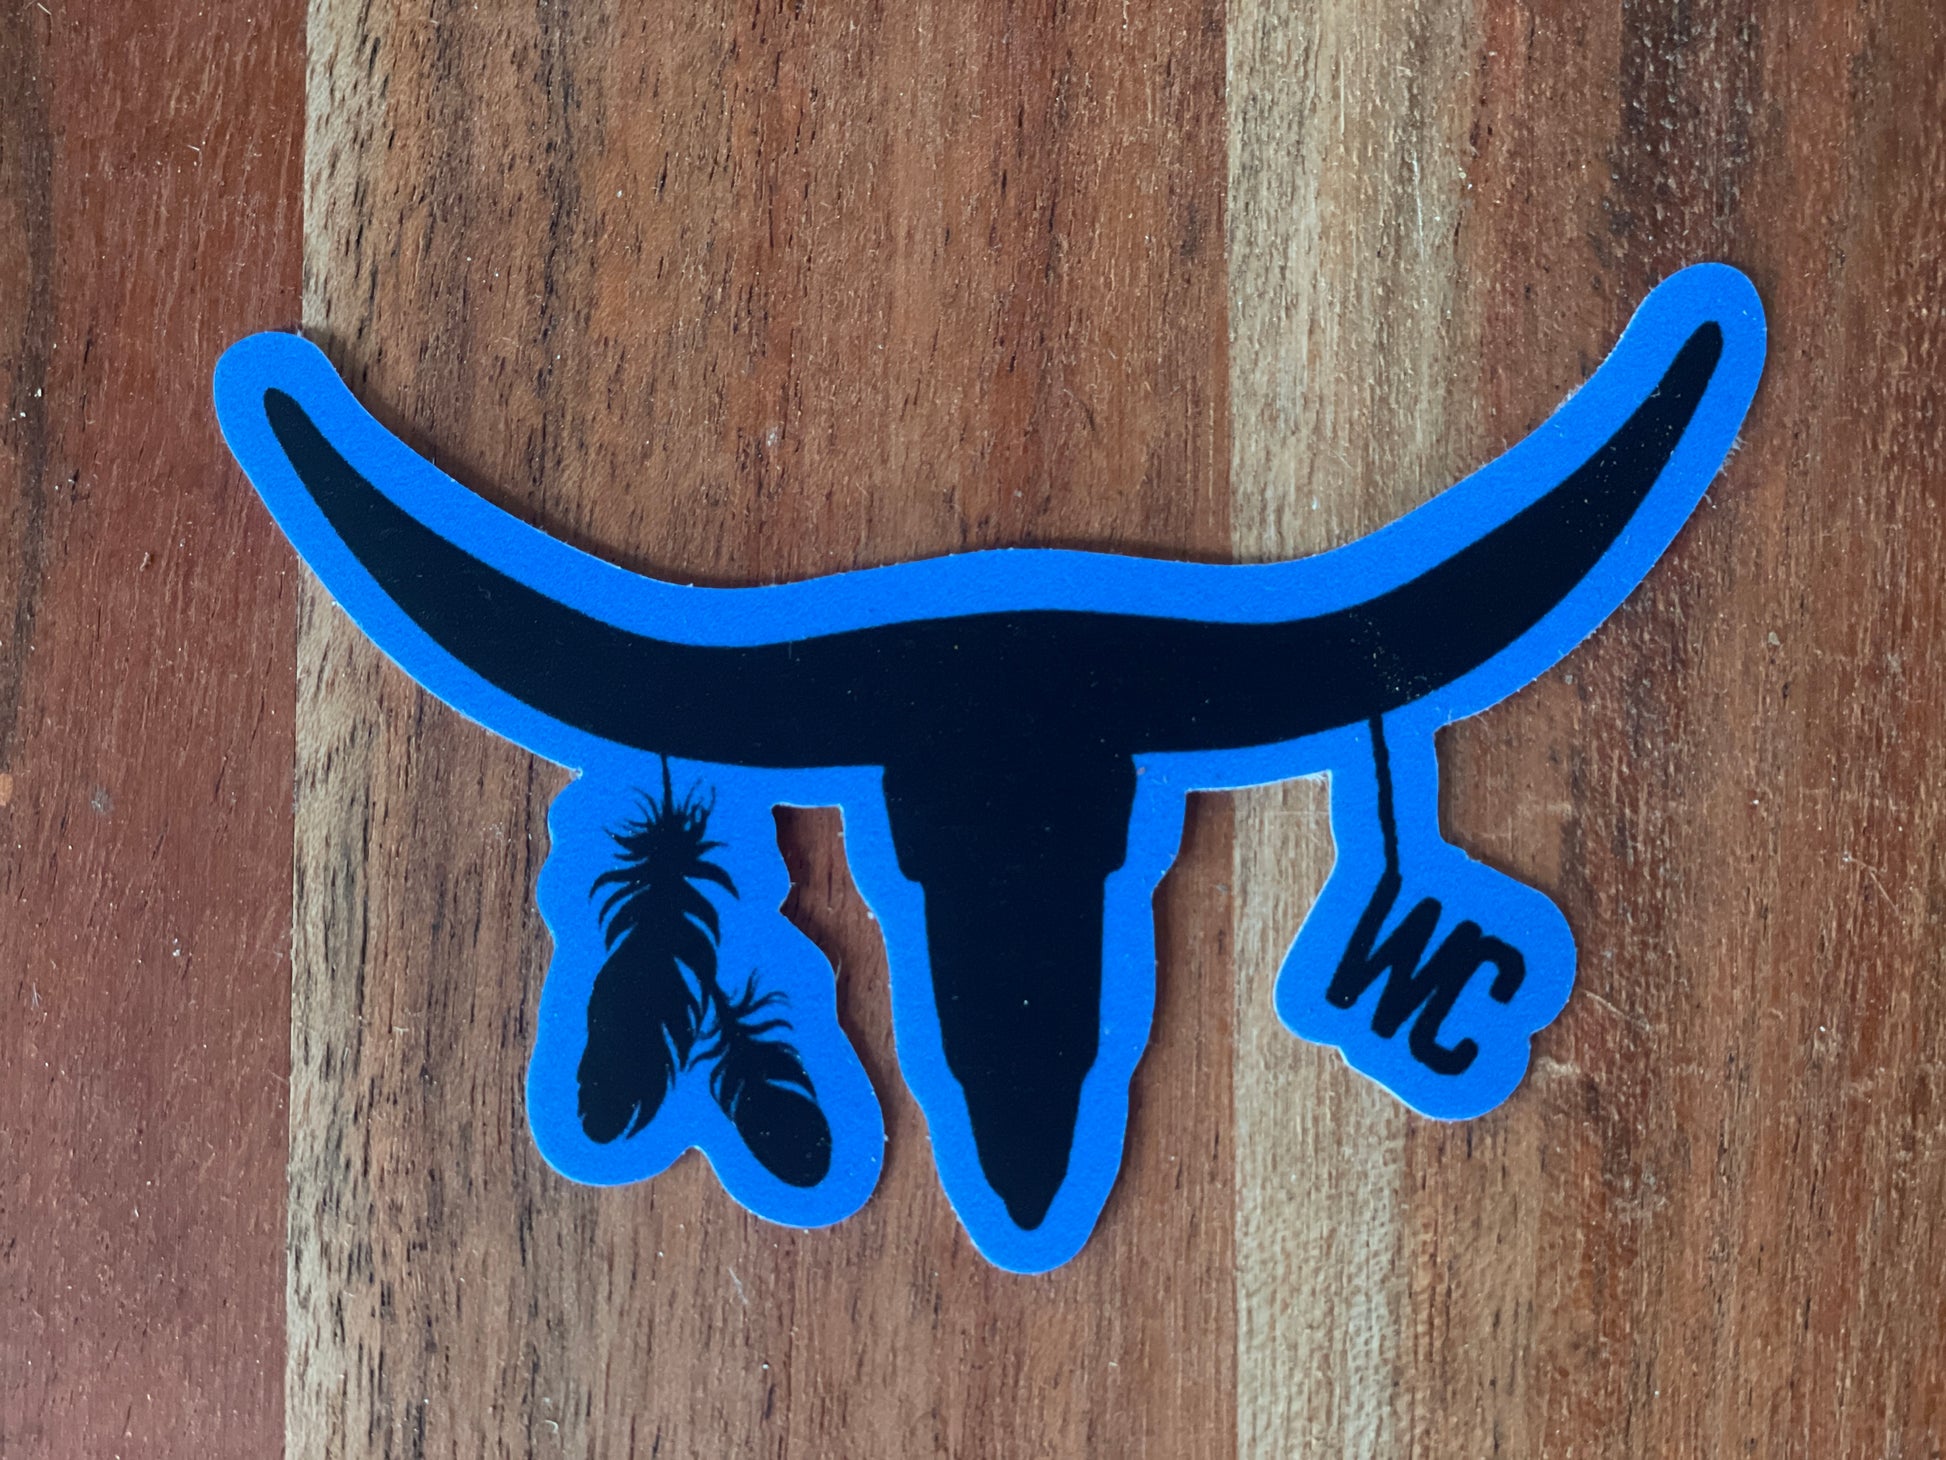 WC horn logo sticker-Western Culture Leather